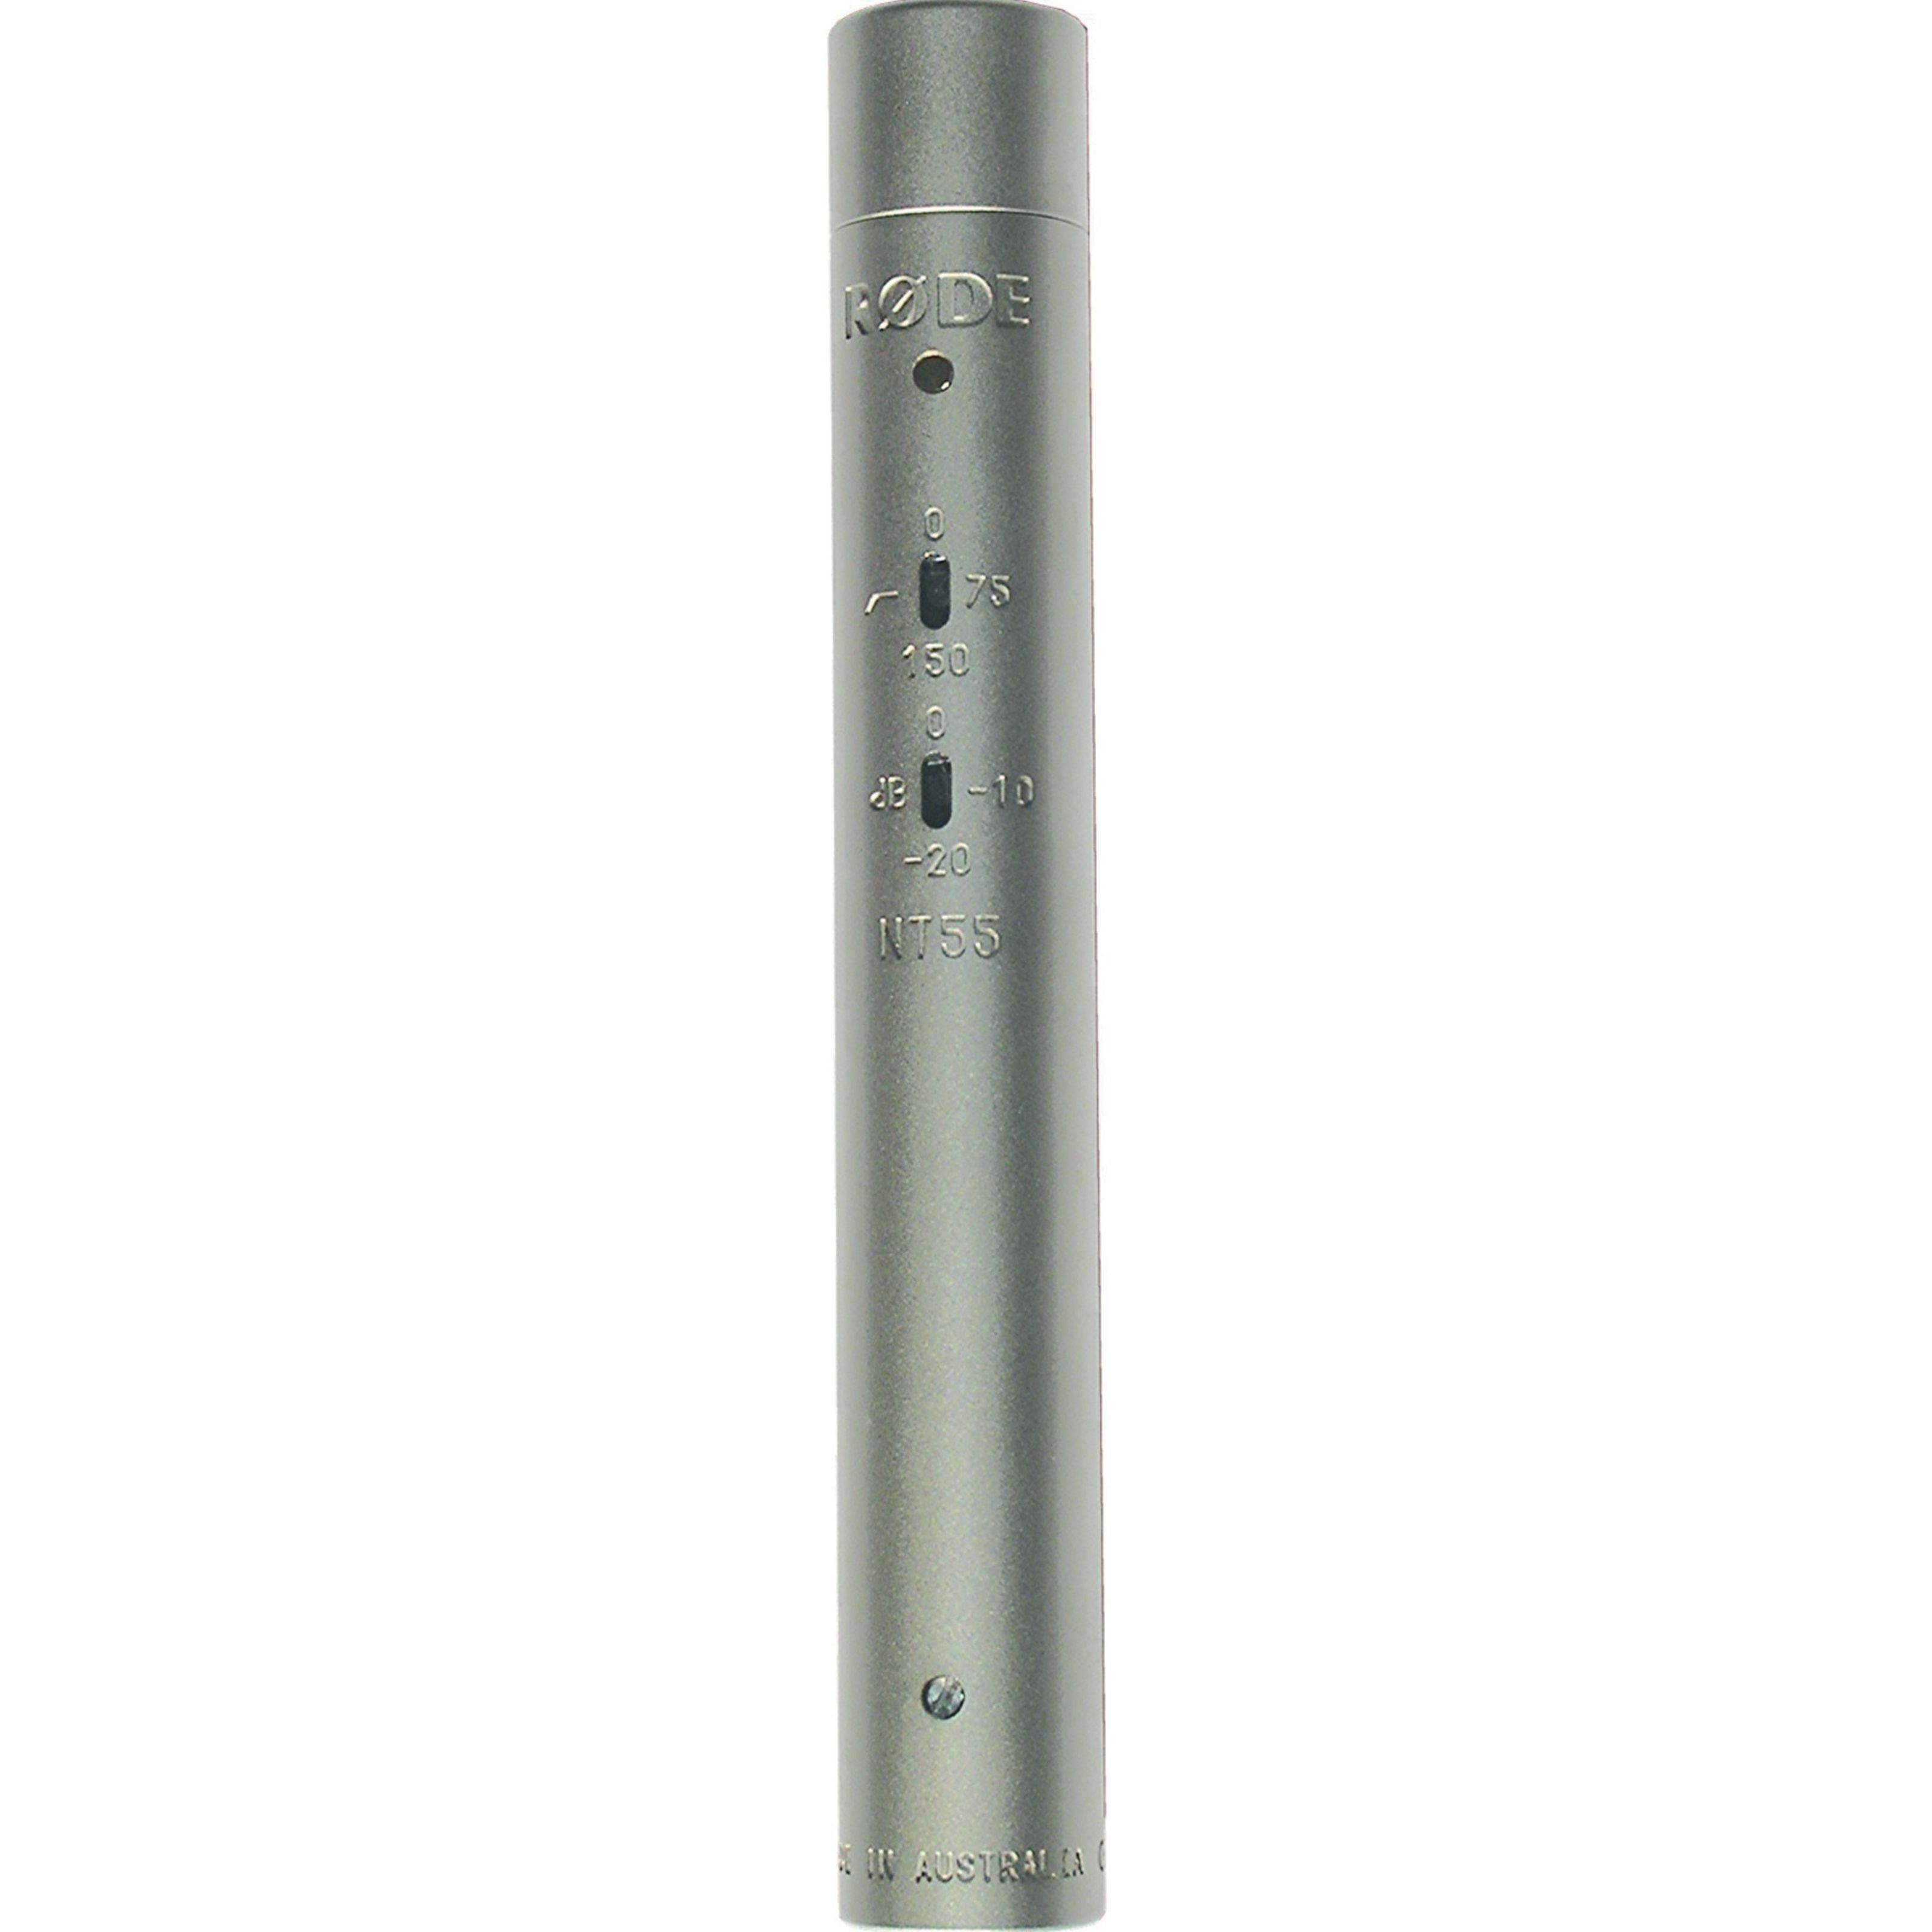 RODE Microphones Mikrofon (NT55 Single Kleinmembranmikrofon), Røde NT55, Kleinmembran-Kondensatormikrofon mit Kugel-Wechselkapsel